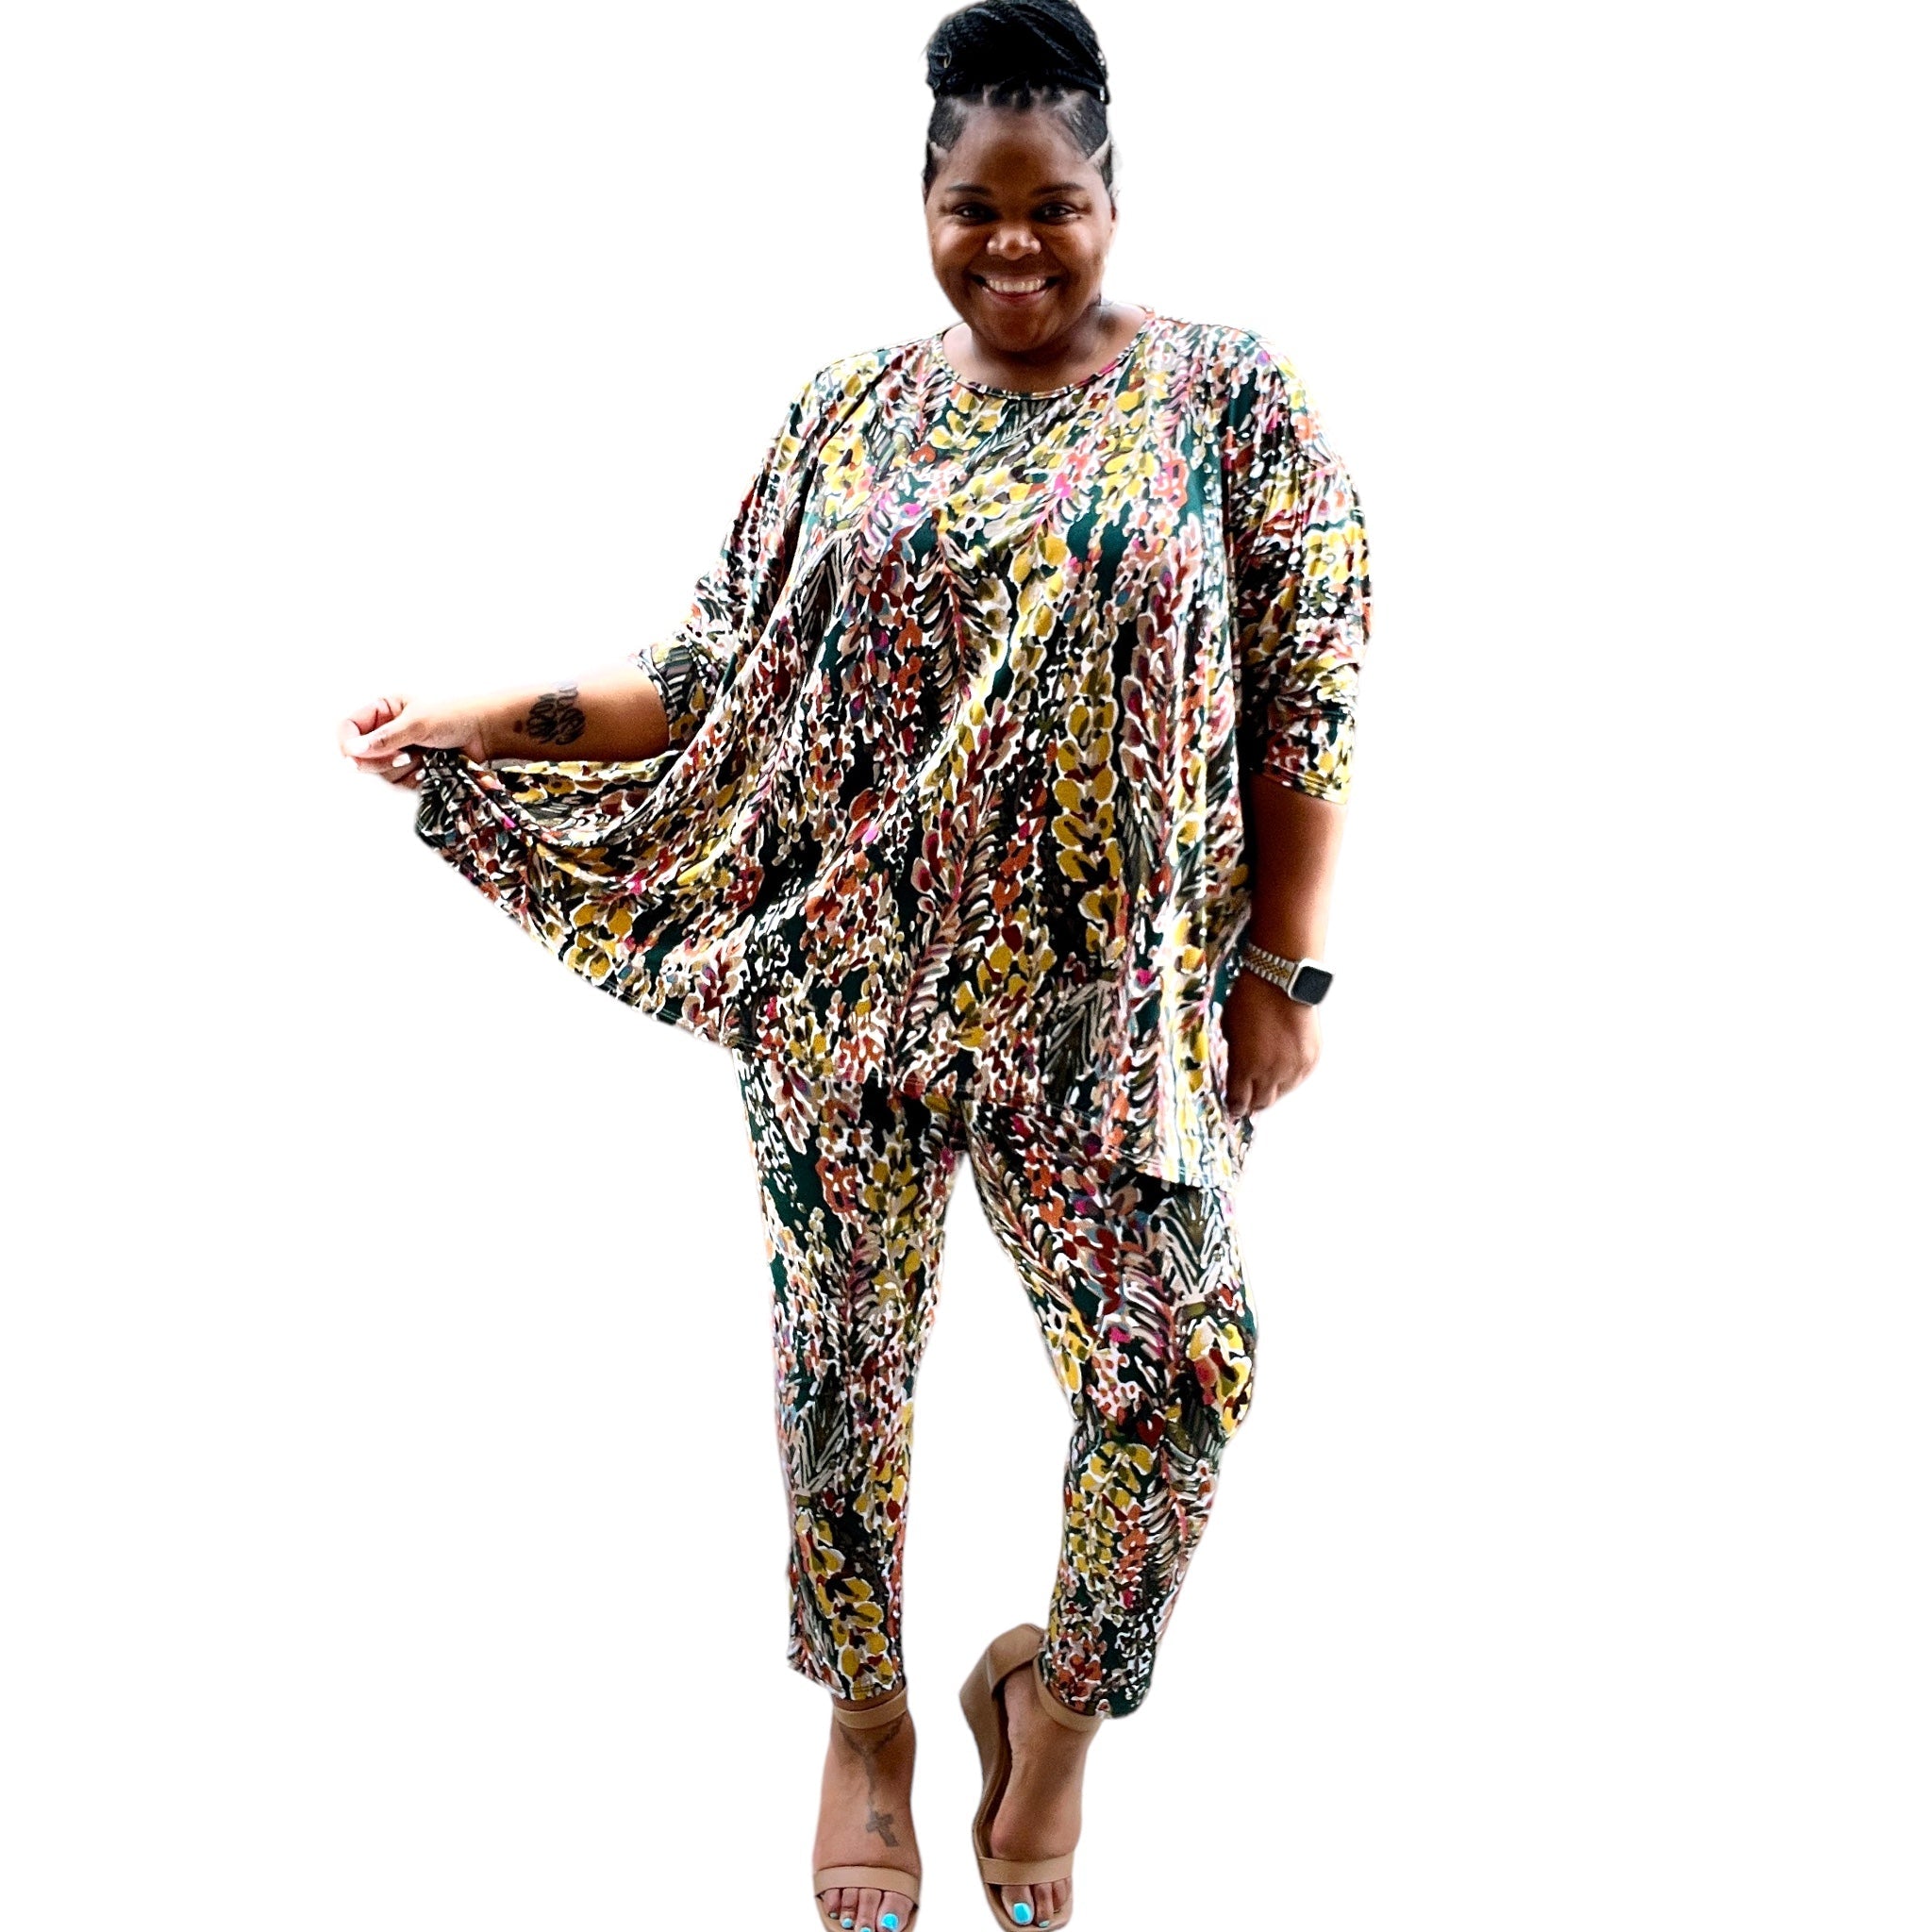 Plus Size Women’s Multicolored Leggings Set - Fabulously Dressed Boutique 